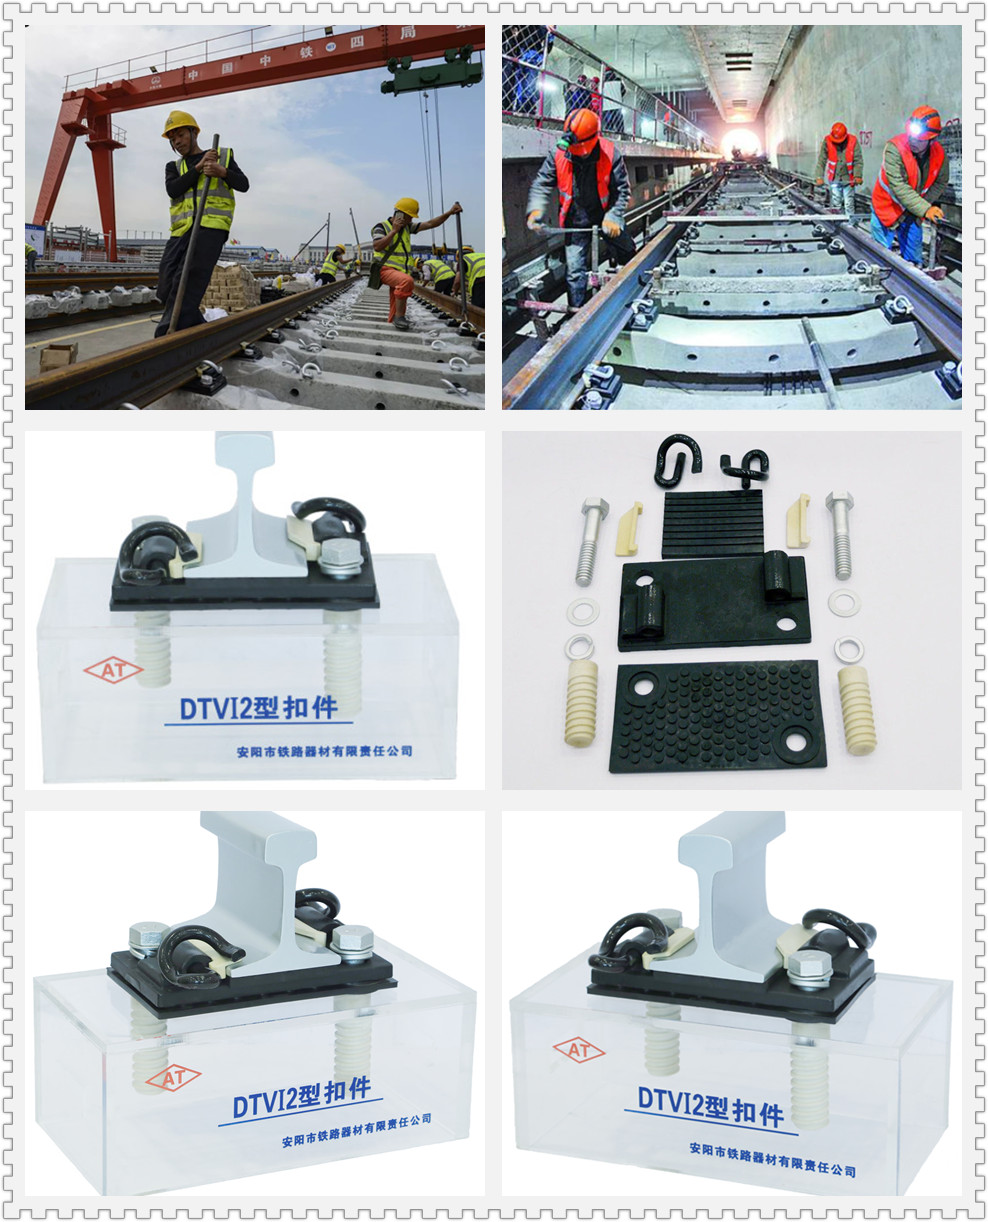 Anyang Railway Equipment Co., Ltd(AT) provided Rail Fasteners, Rail Fastening Systems for Harbin Metro(Subway)